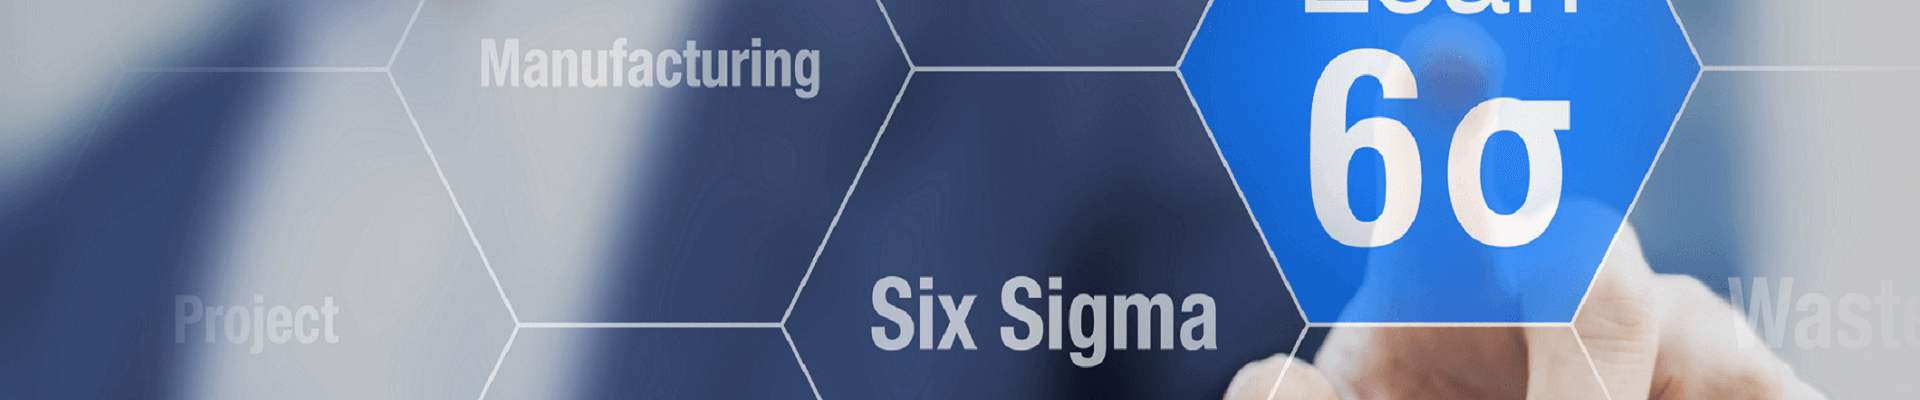 Lean Six Sigma Principles Training